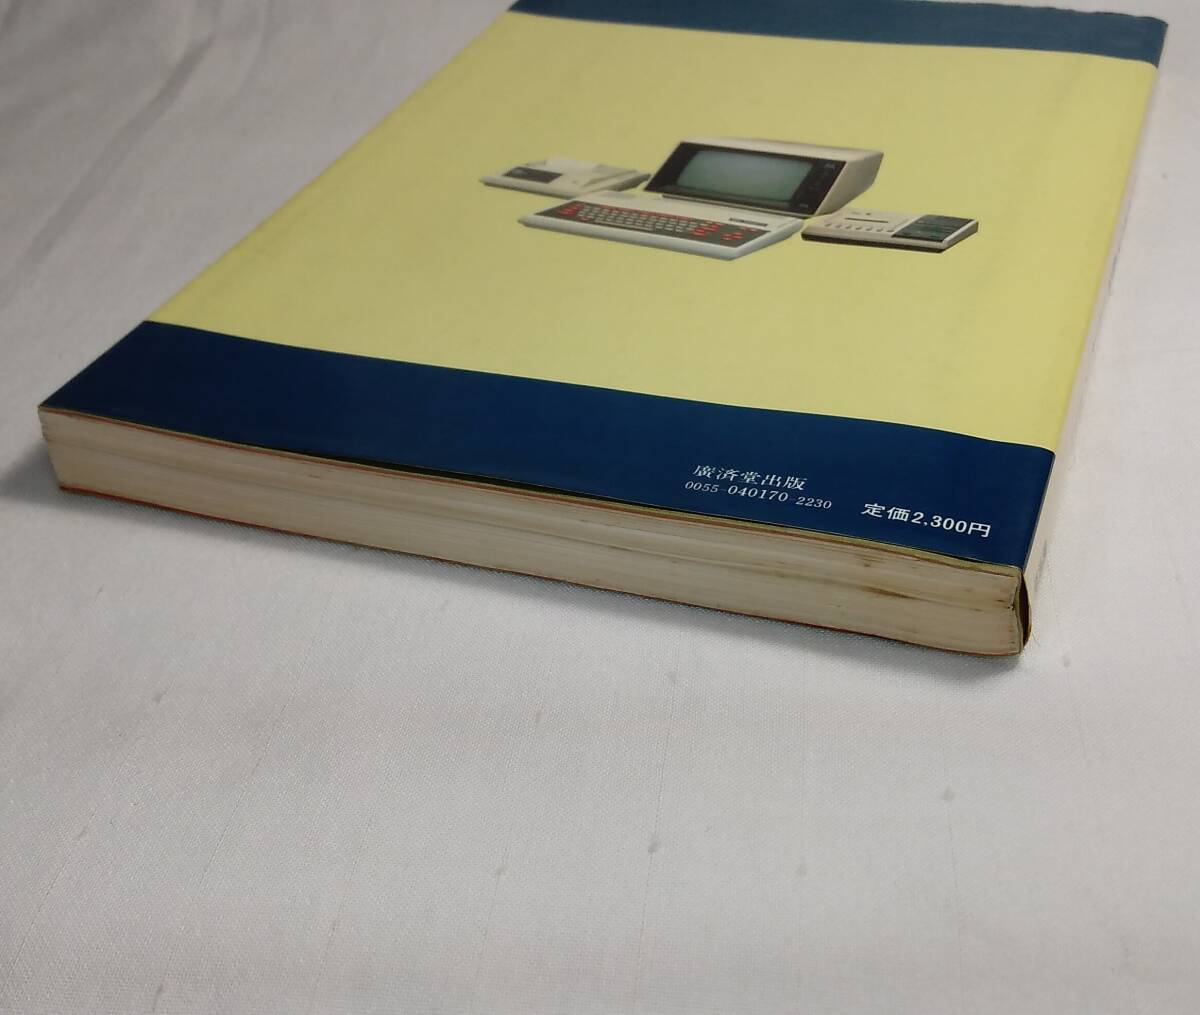 NEC PC-6001 program textbook 